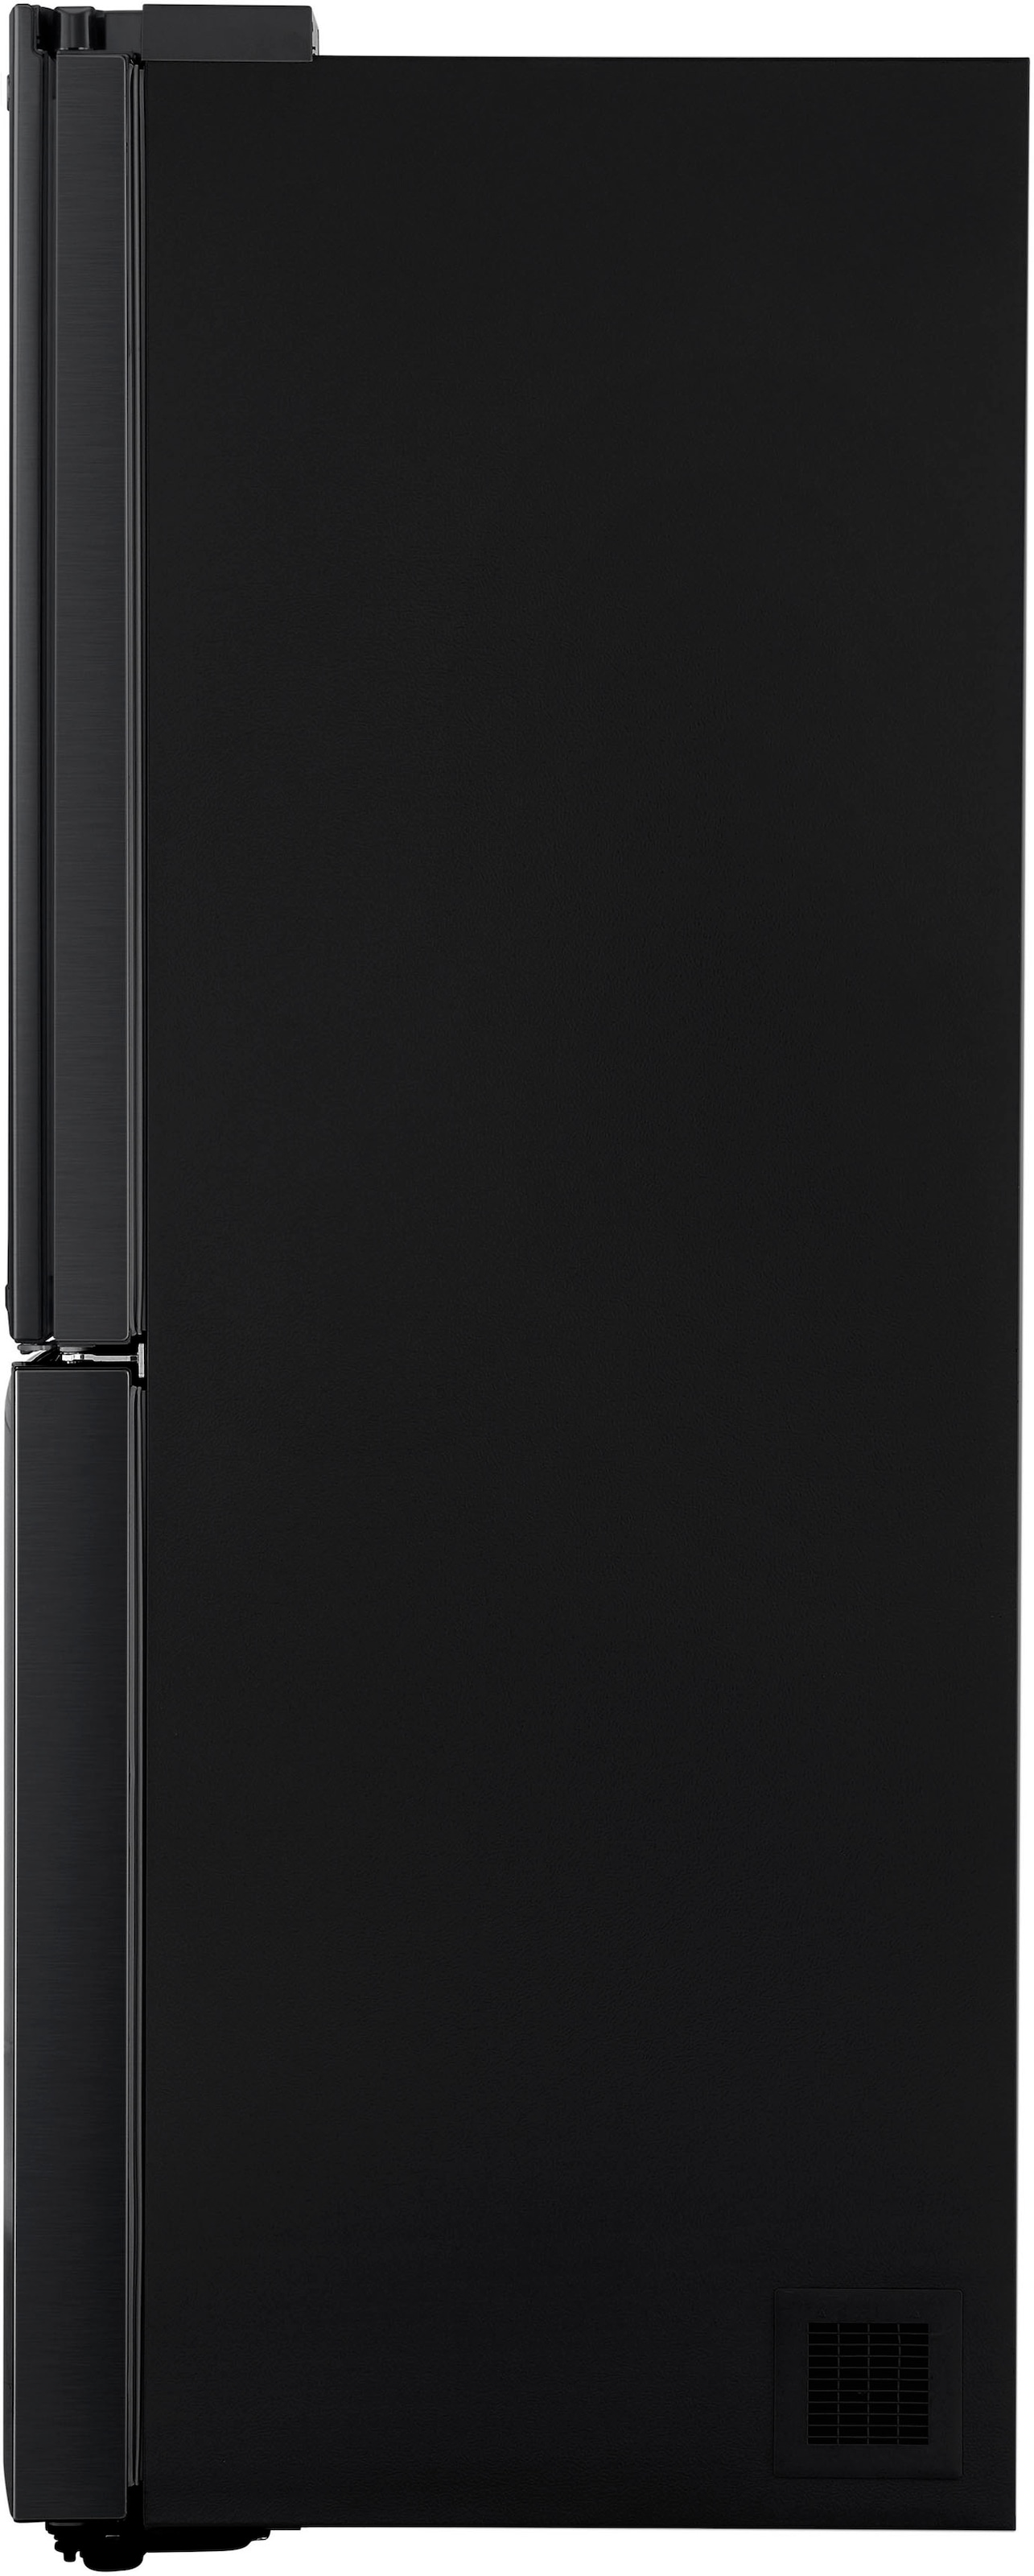 LG Multi Door, GMQ844MC5E, 178,7 cm hoch, 83,5 cm breit, InstaView™